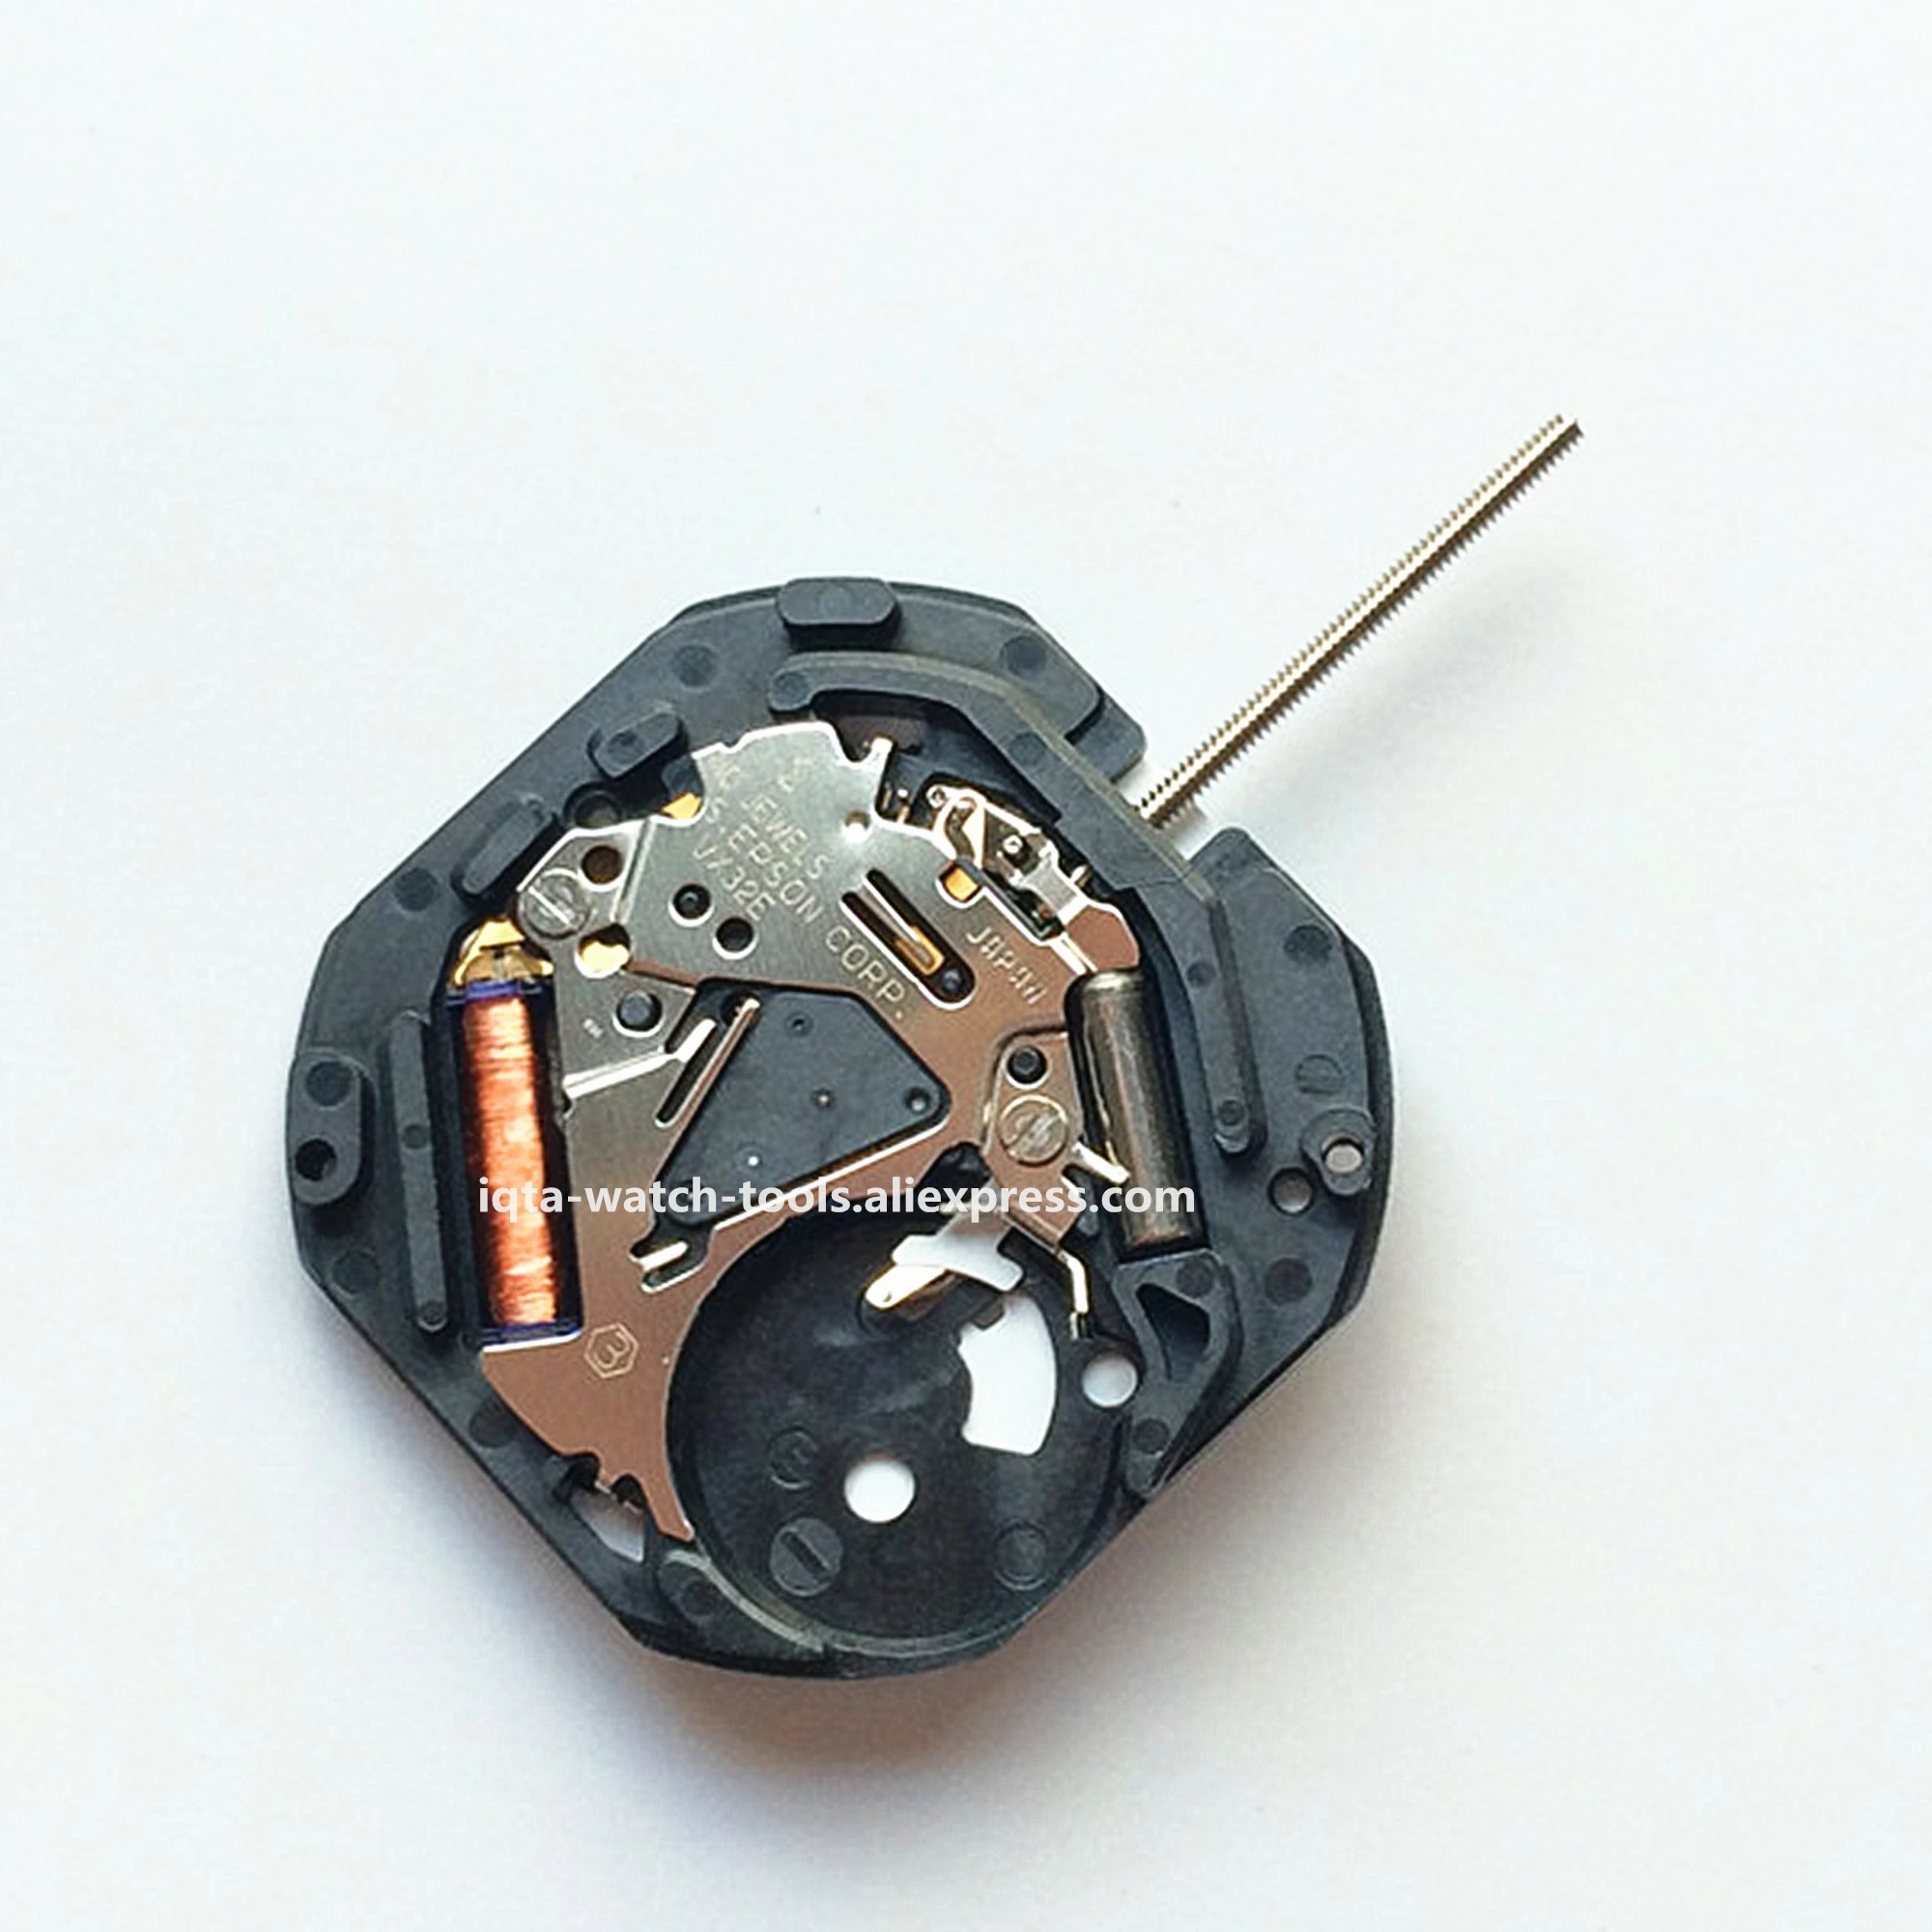 Epson VX32E Quartz Movement Watches Repair Parts Replaces 7N32 7N39 V722 V732 S